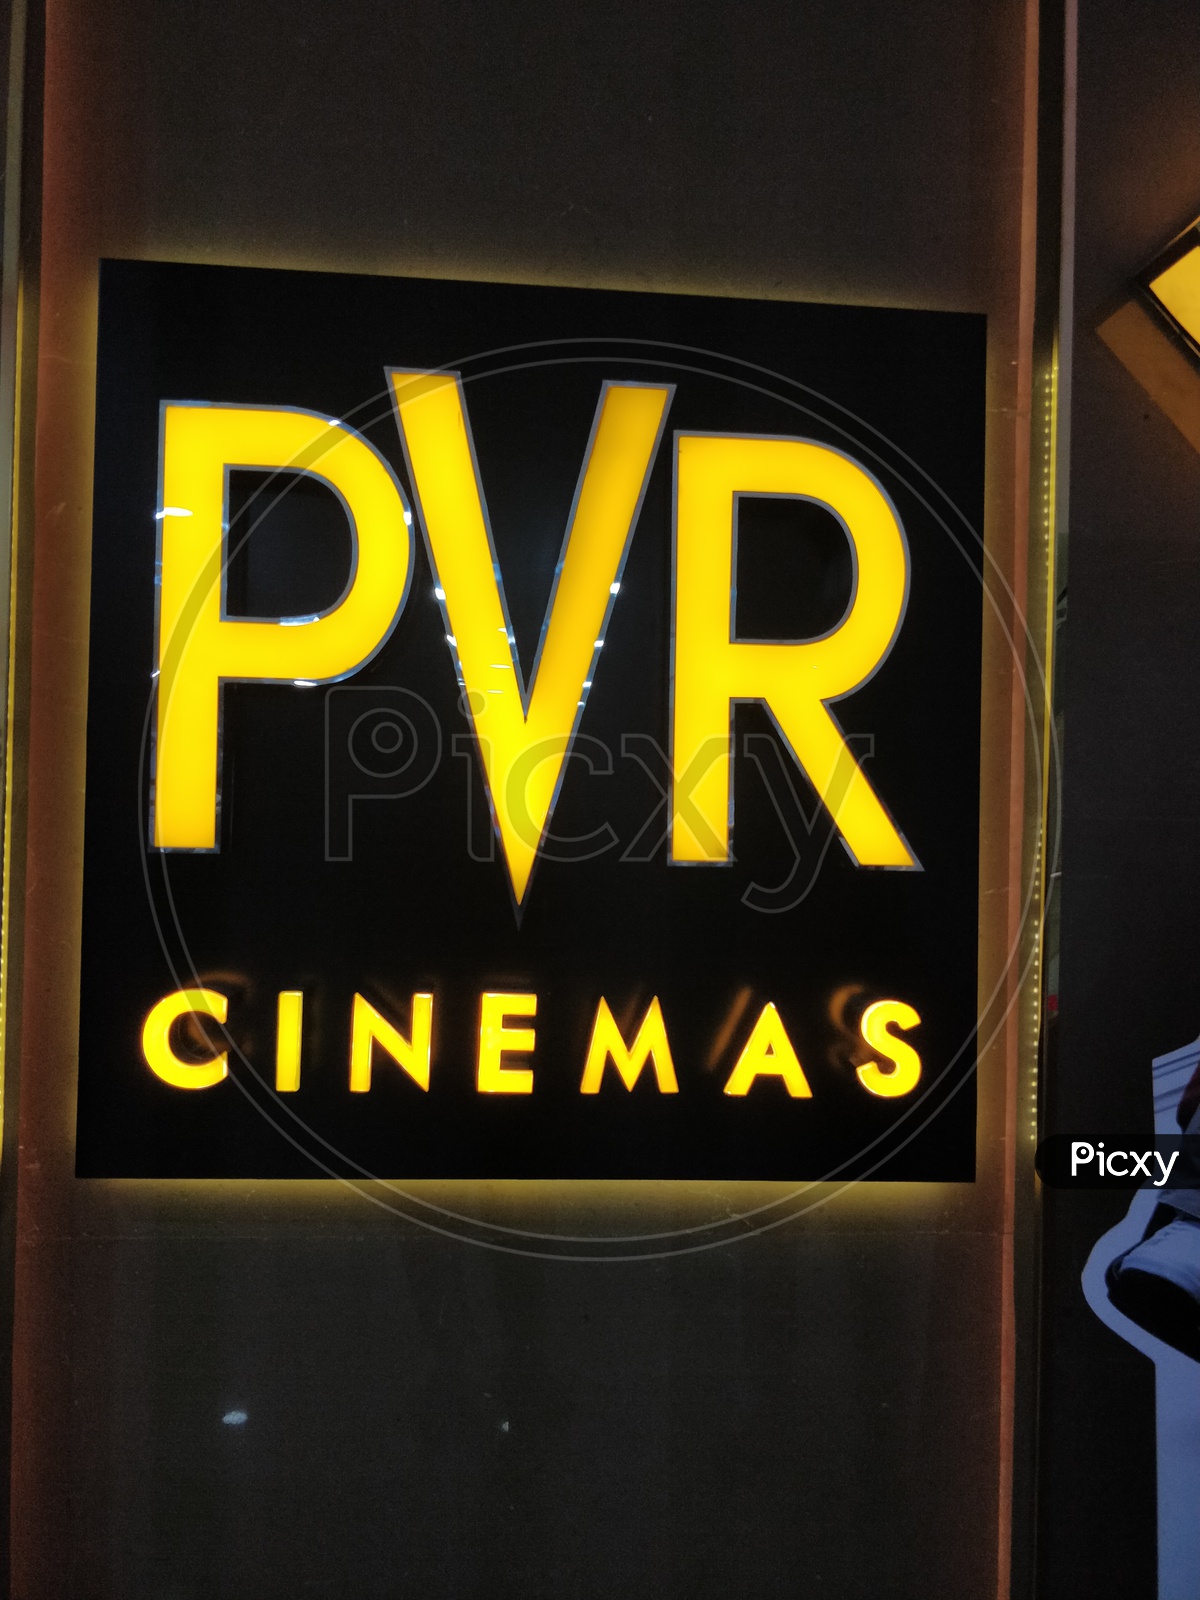 PVR cinemas logo